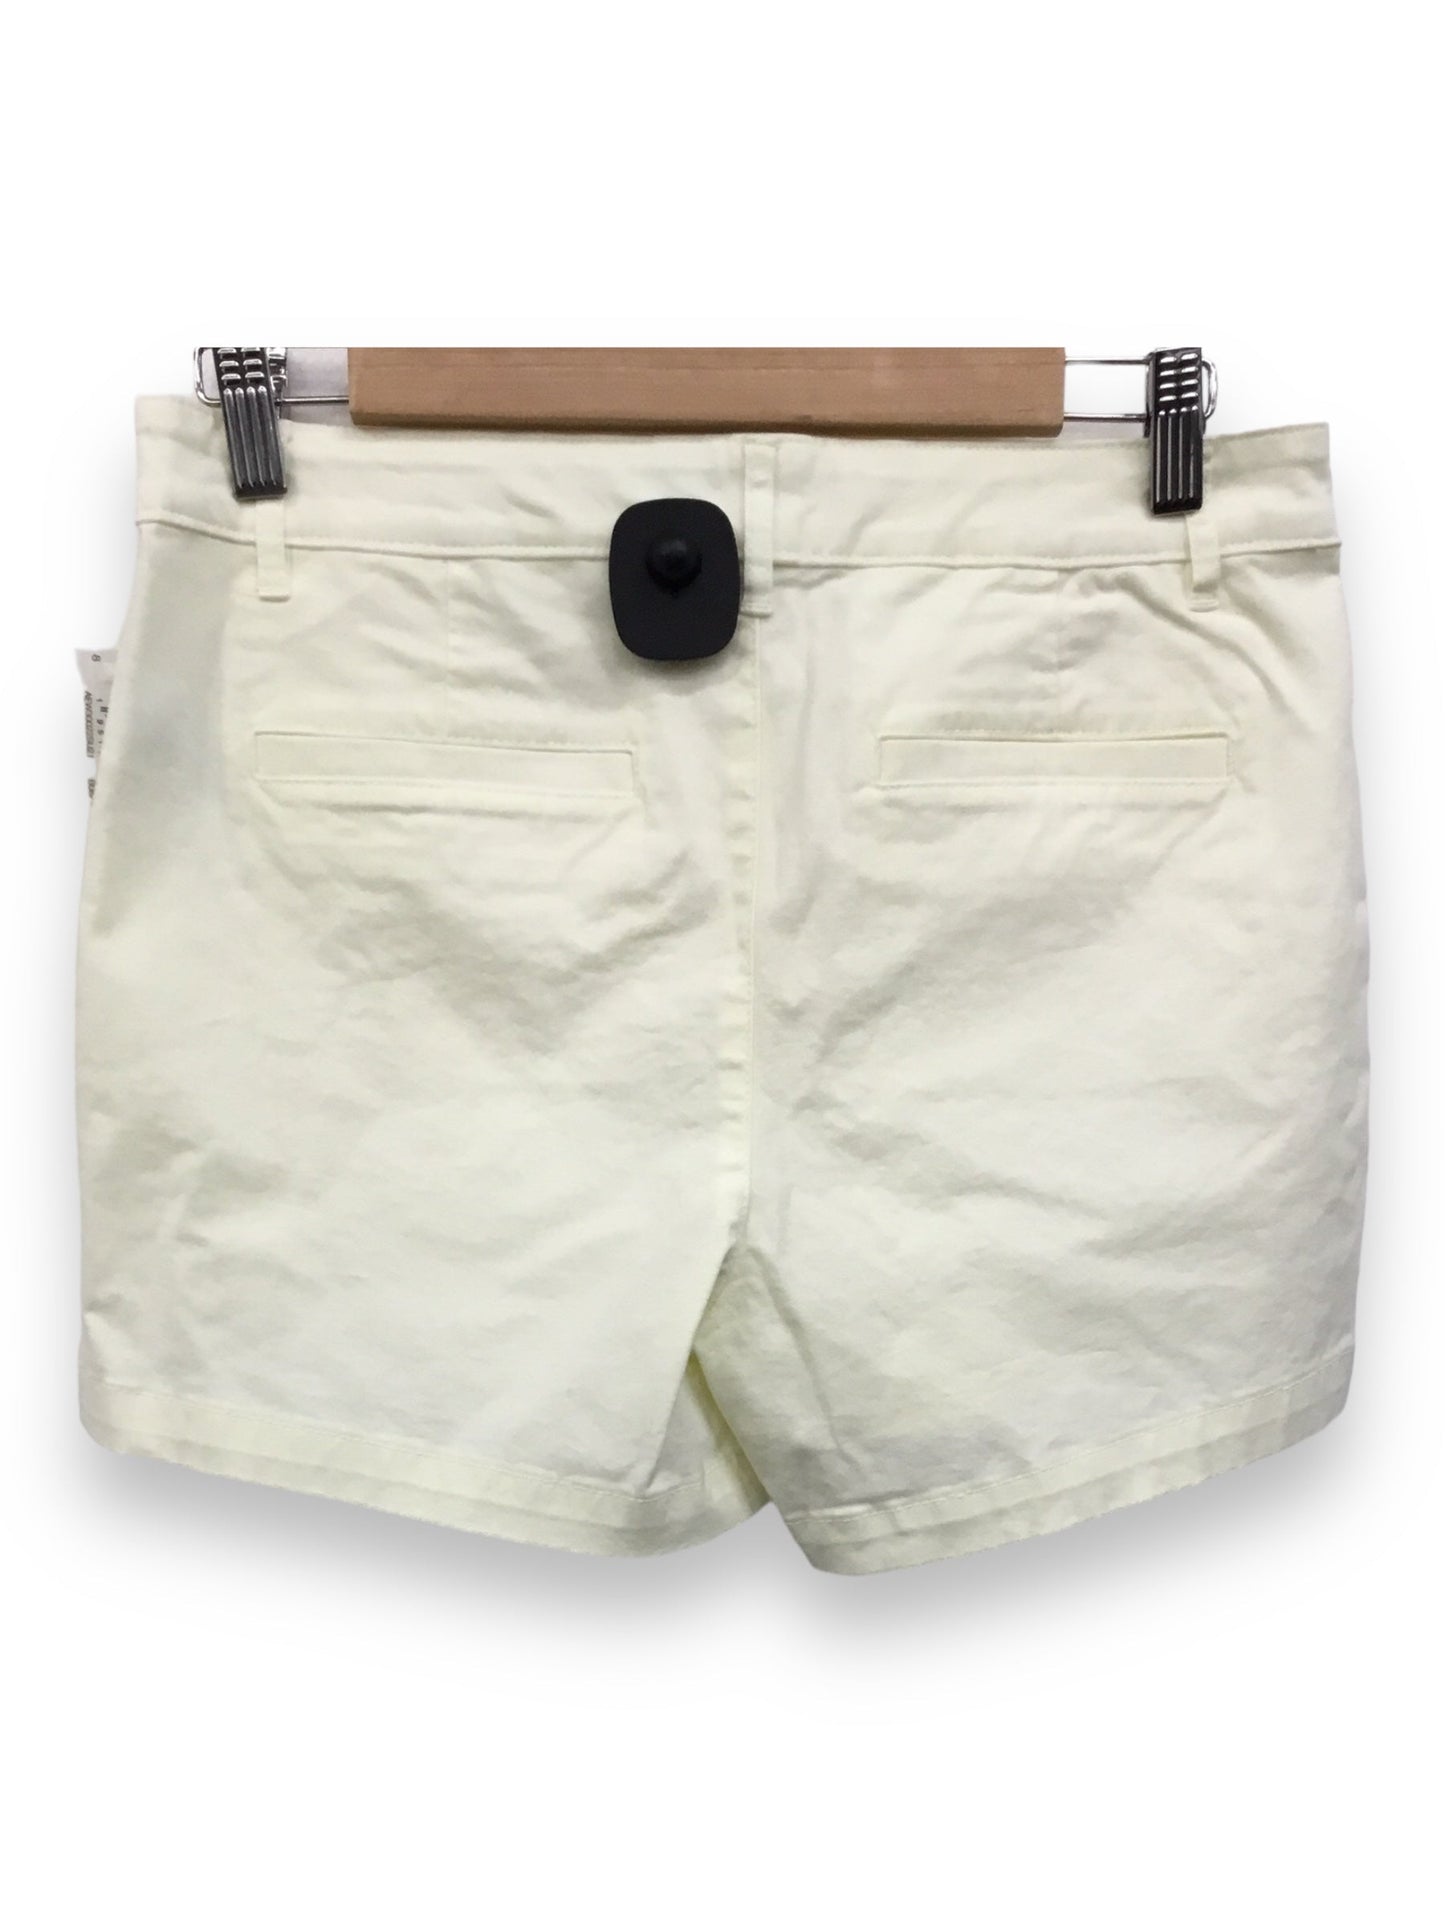 Yellow Shorts Amazon Essentials, Size 8